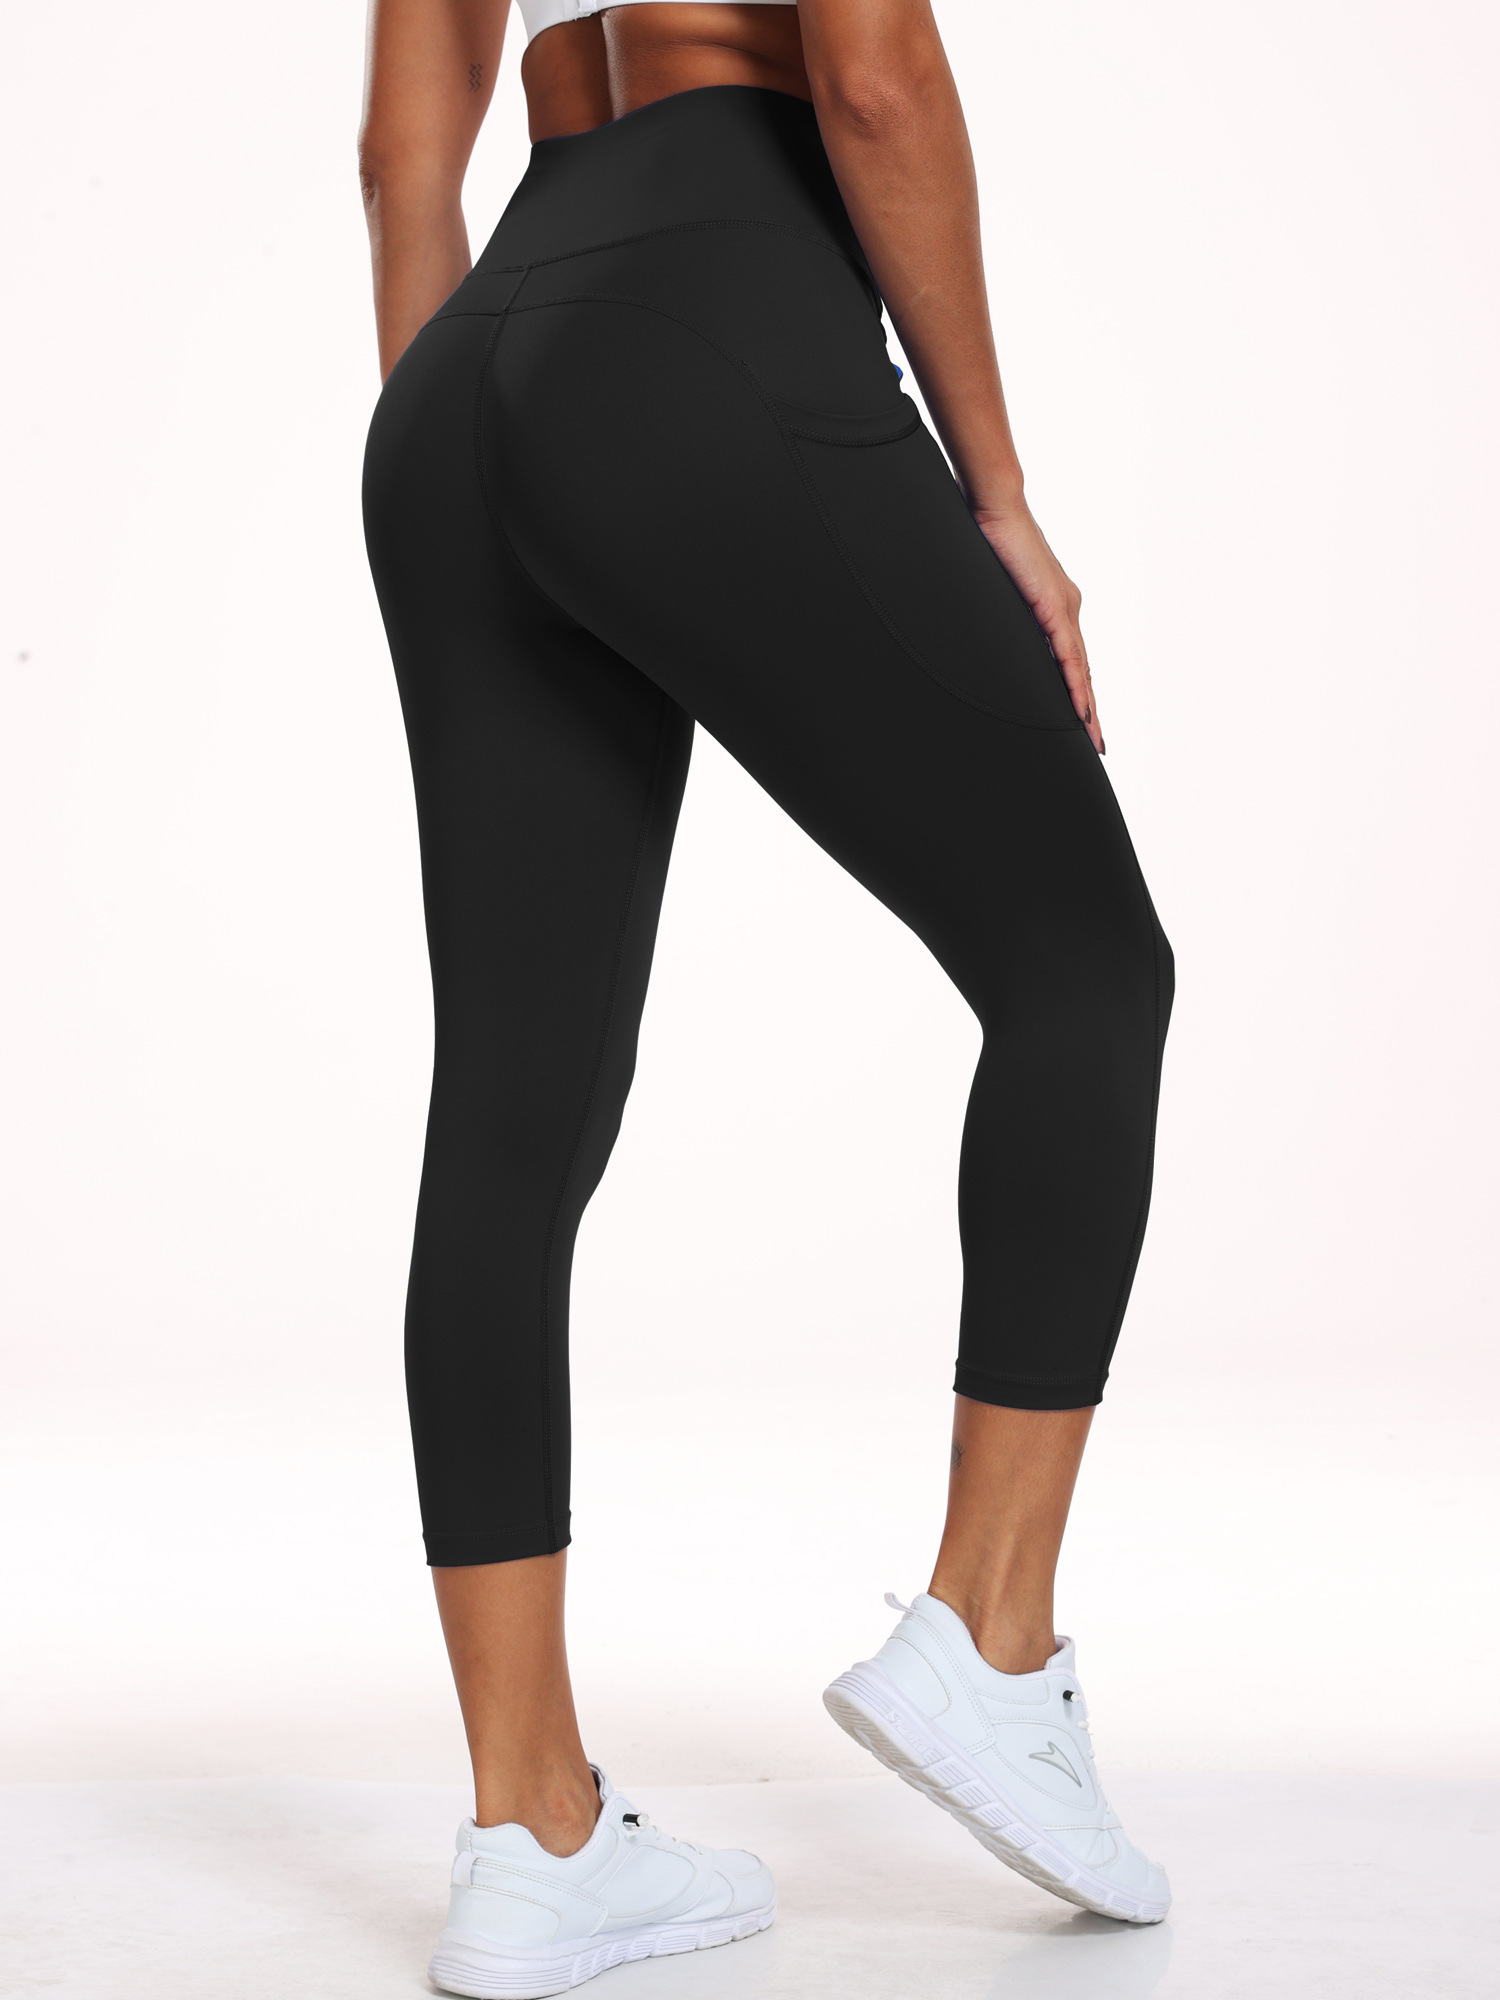 LoyisViDion Woman Pants Clearance Women Workout Out Pocket Pants ...